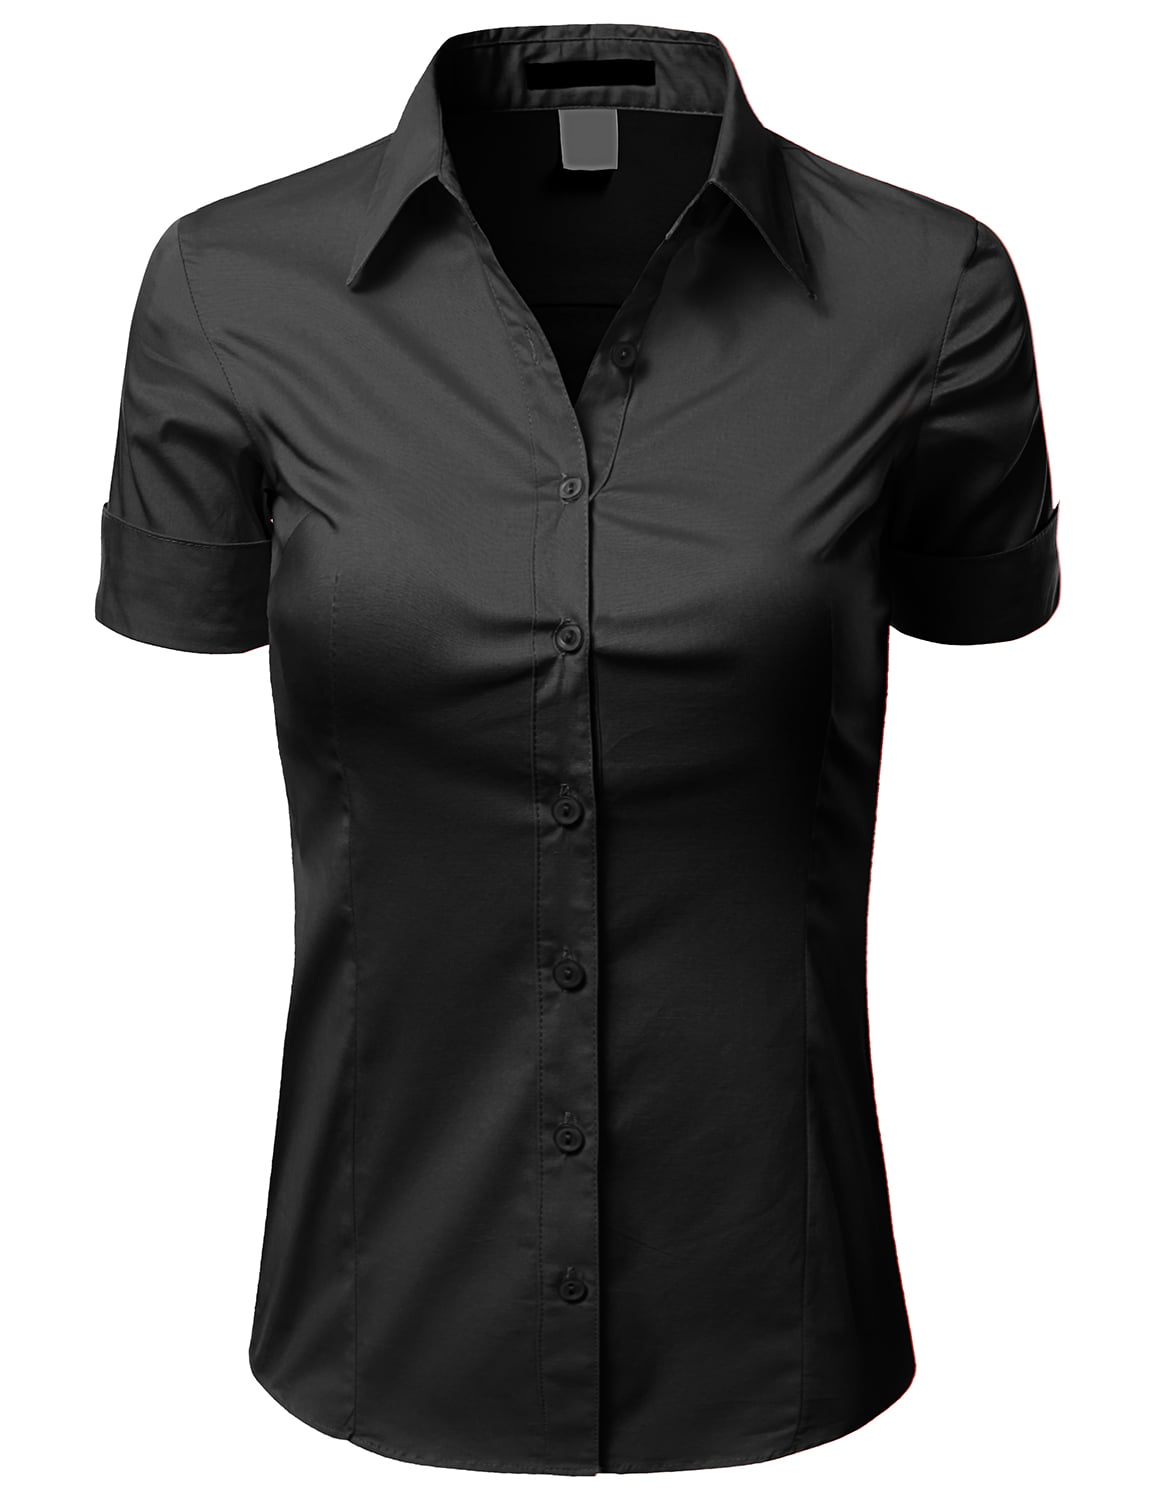 Doublju Women's Short Sleeve Cotton Spandex Button Down Shirt - Walmart.com